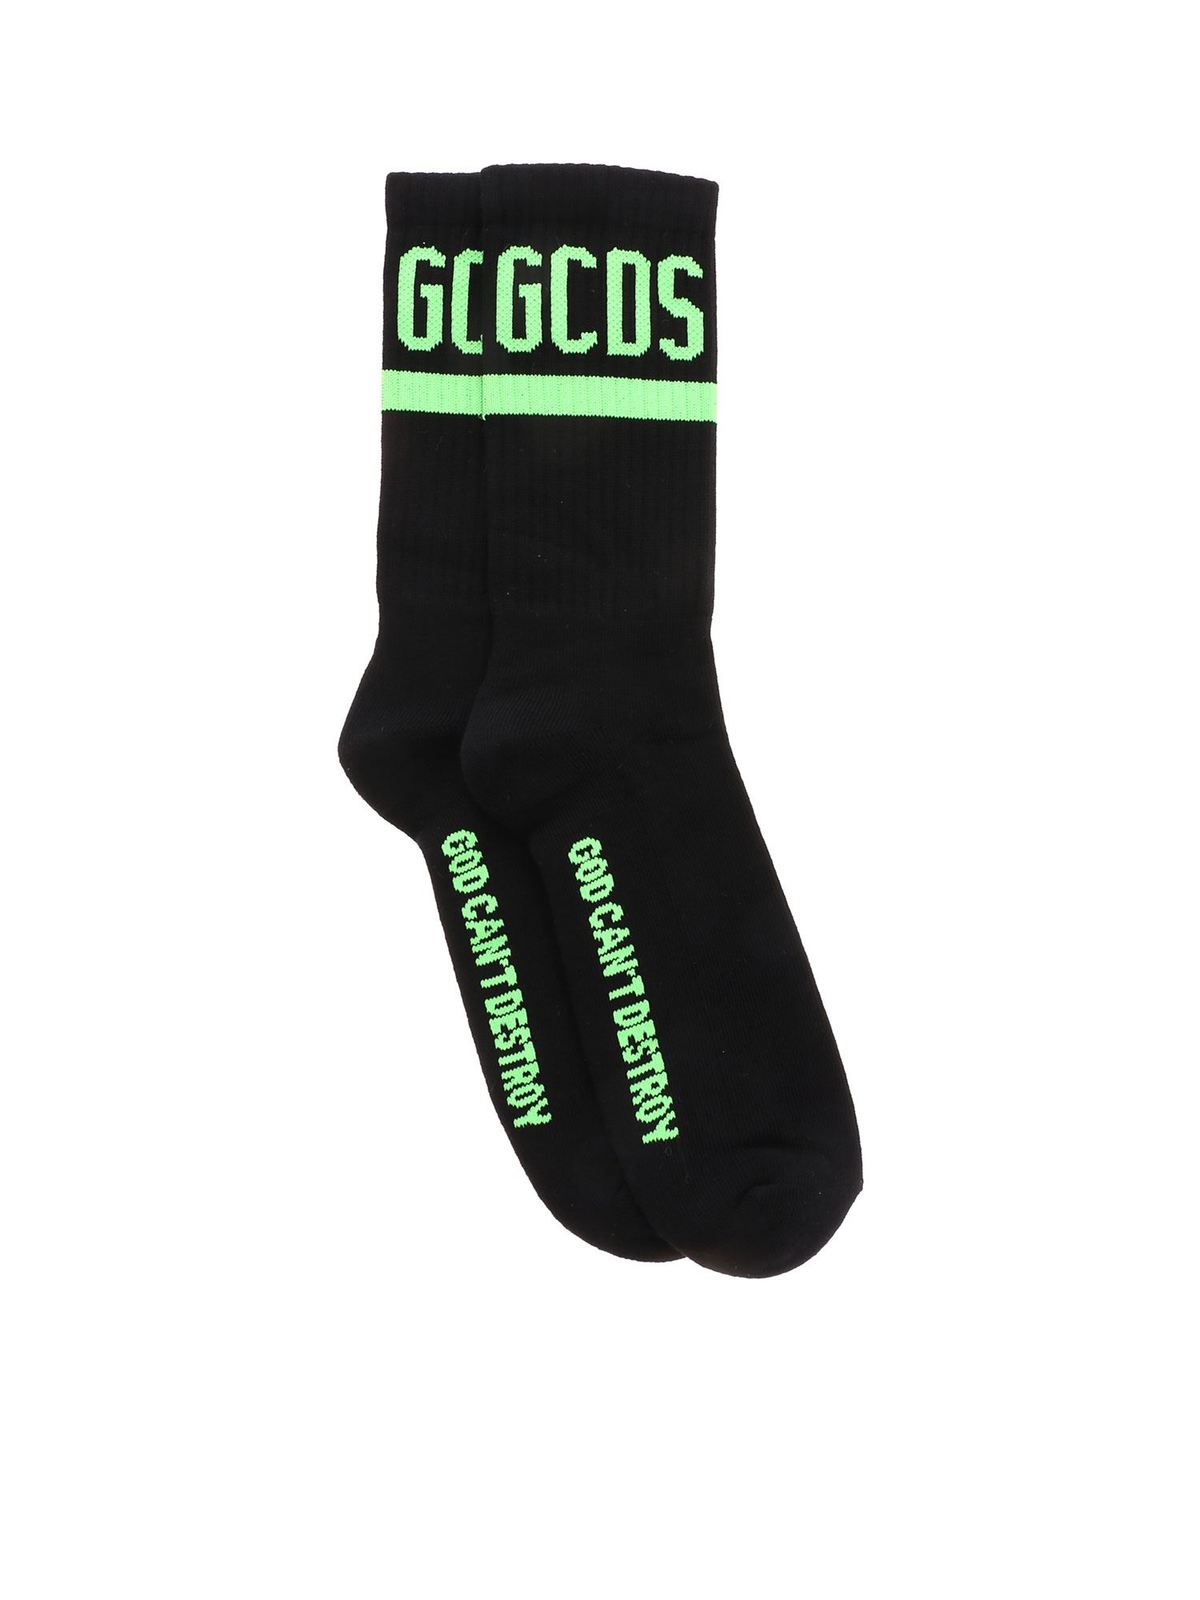 GCDS GCDS SOCKS IN BLACK AND NEON GREEN